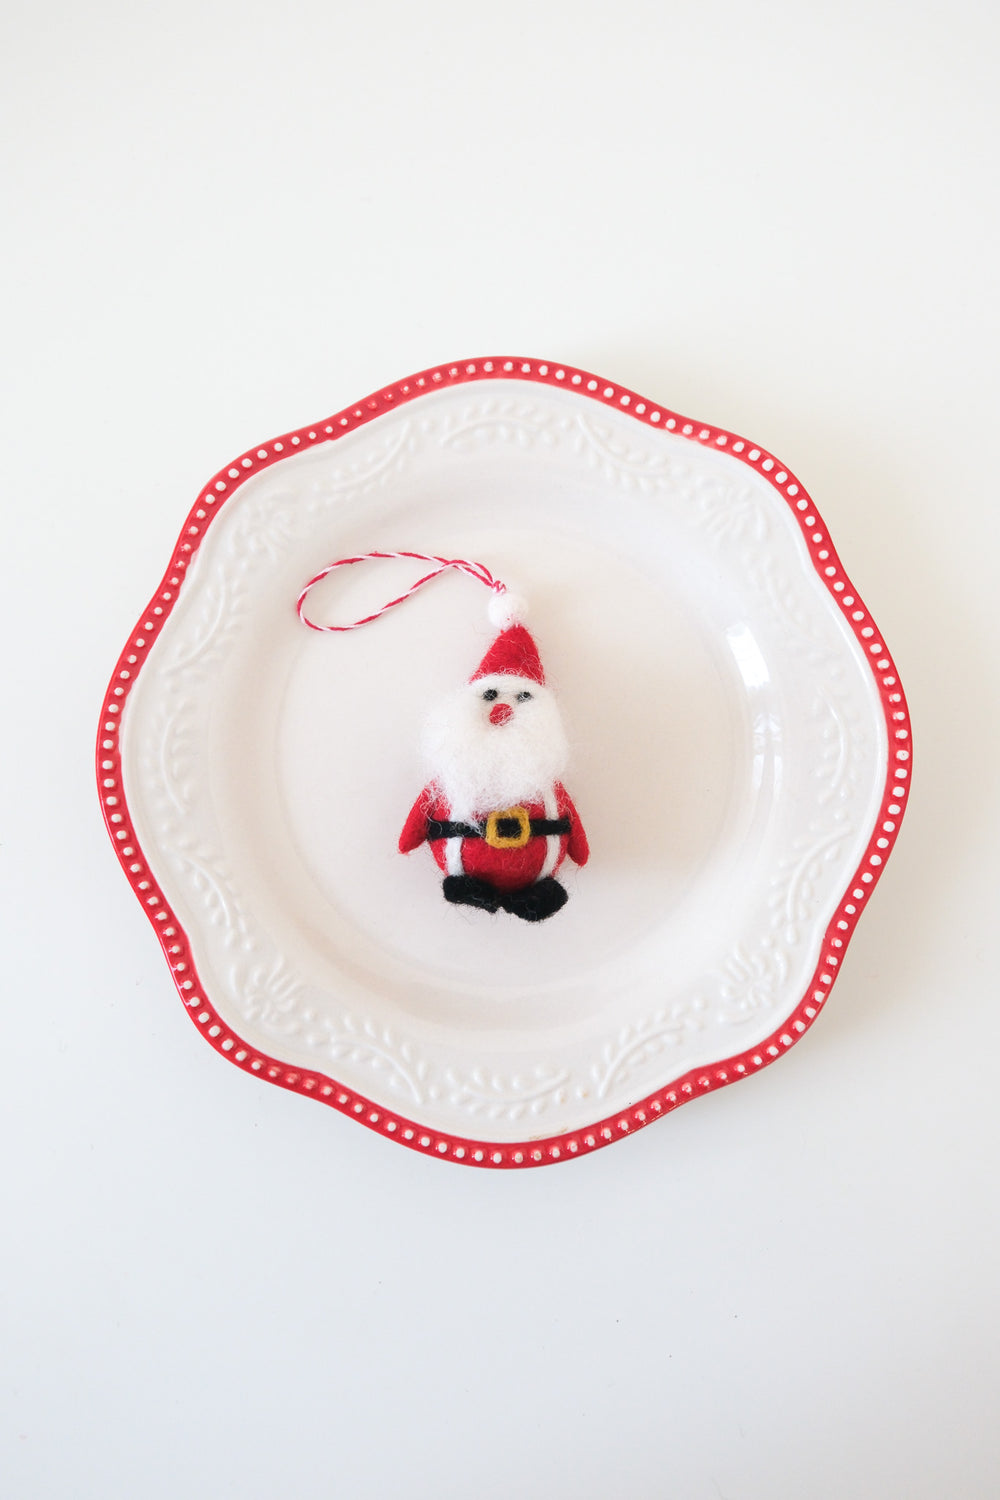 [XMAS] Christmas Santa Claus Ornaments